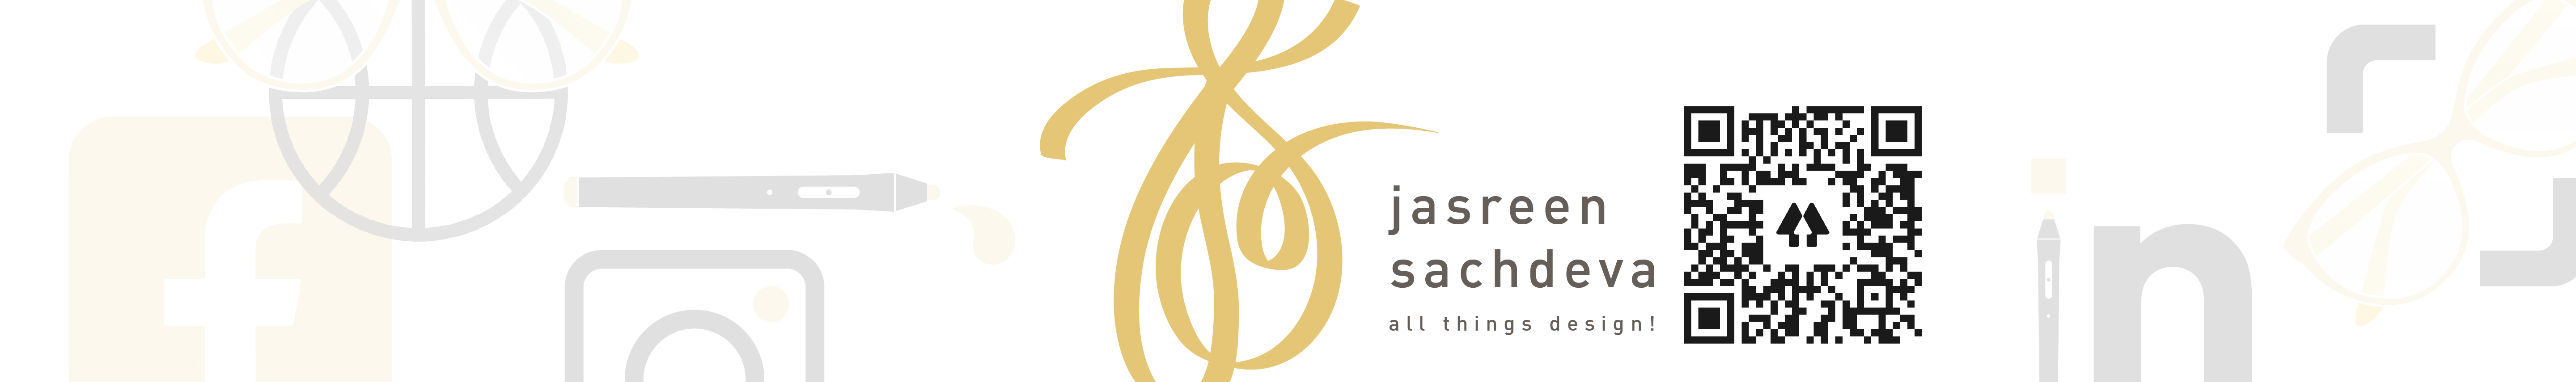 Jasreen Sachdeva's profile banner